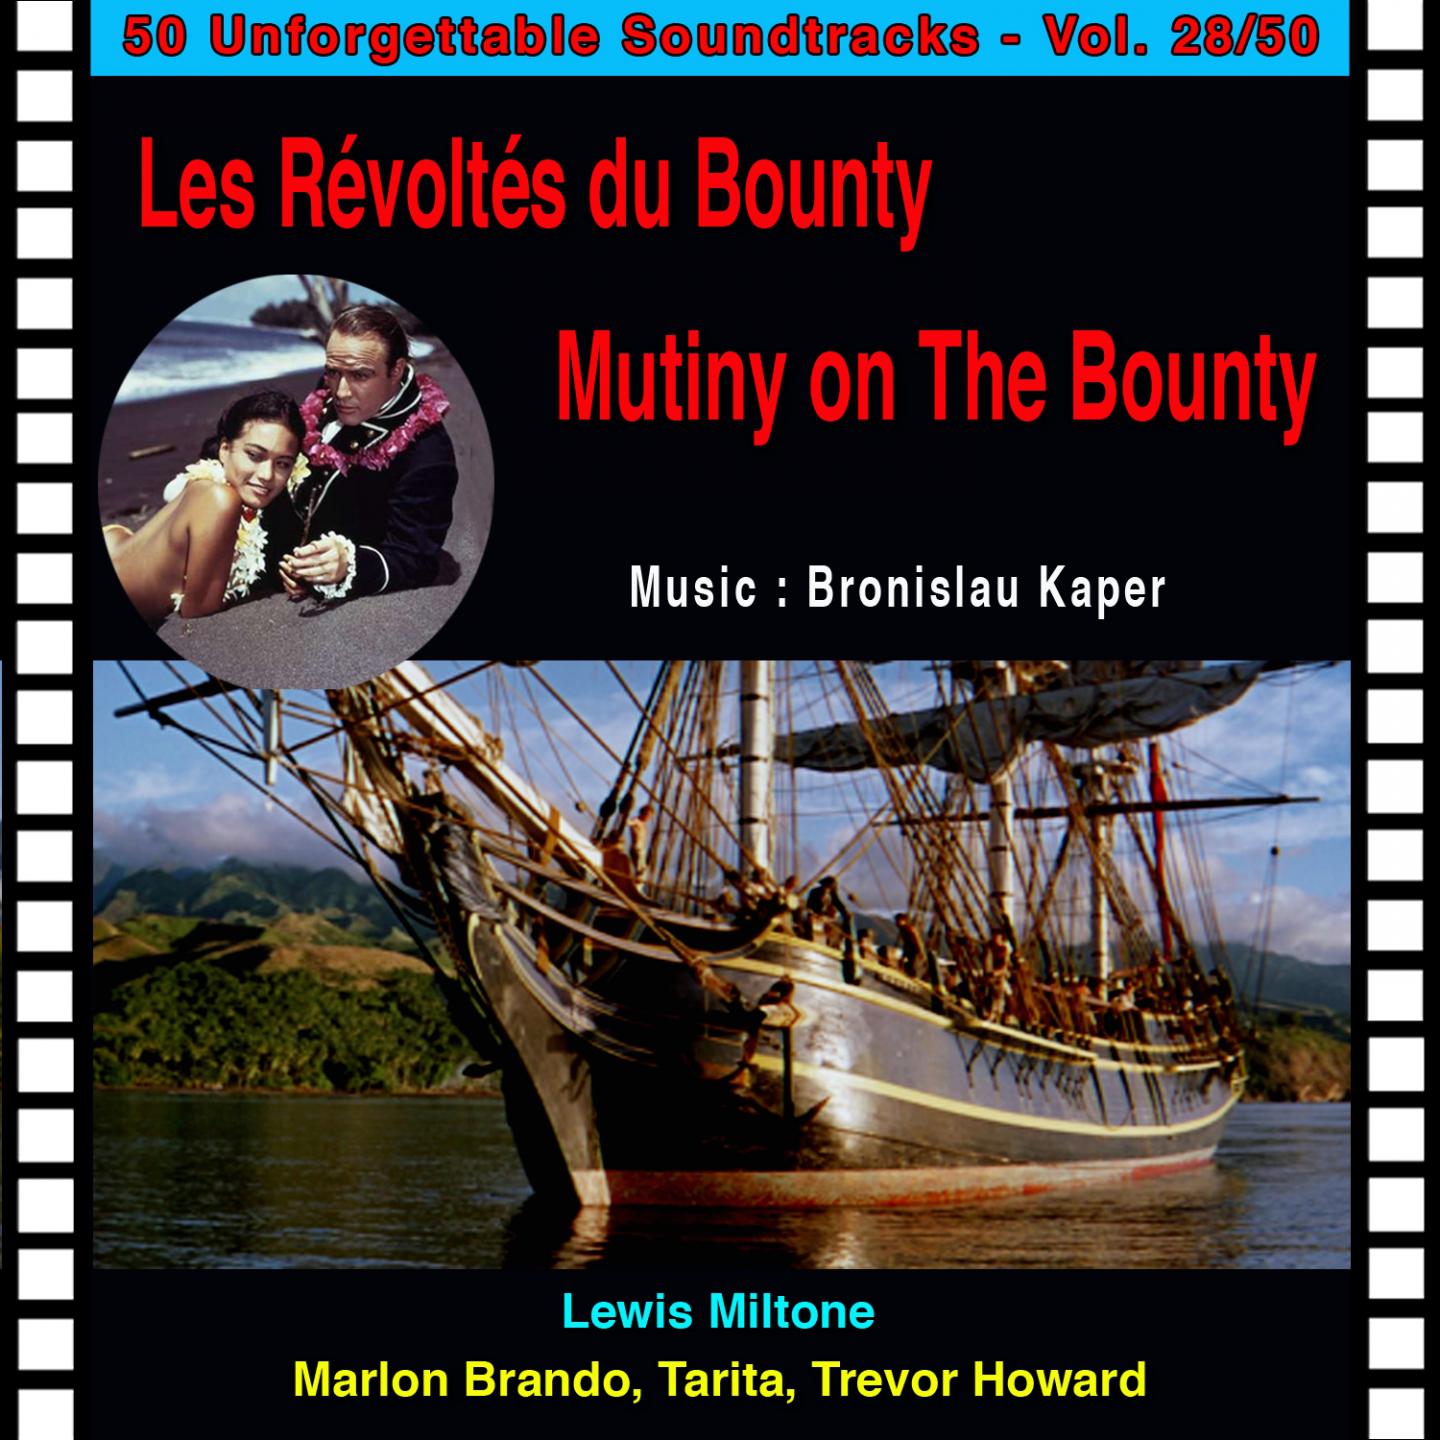 Blue Hawa Les Re volte s Du Bounty  Mutiny on the Bounty